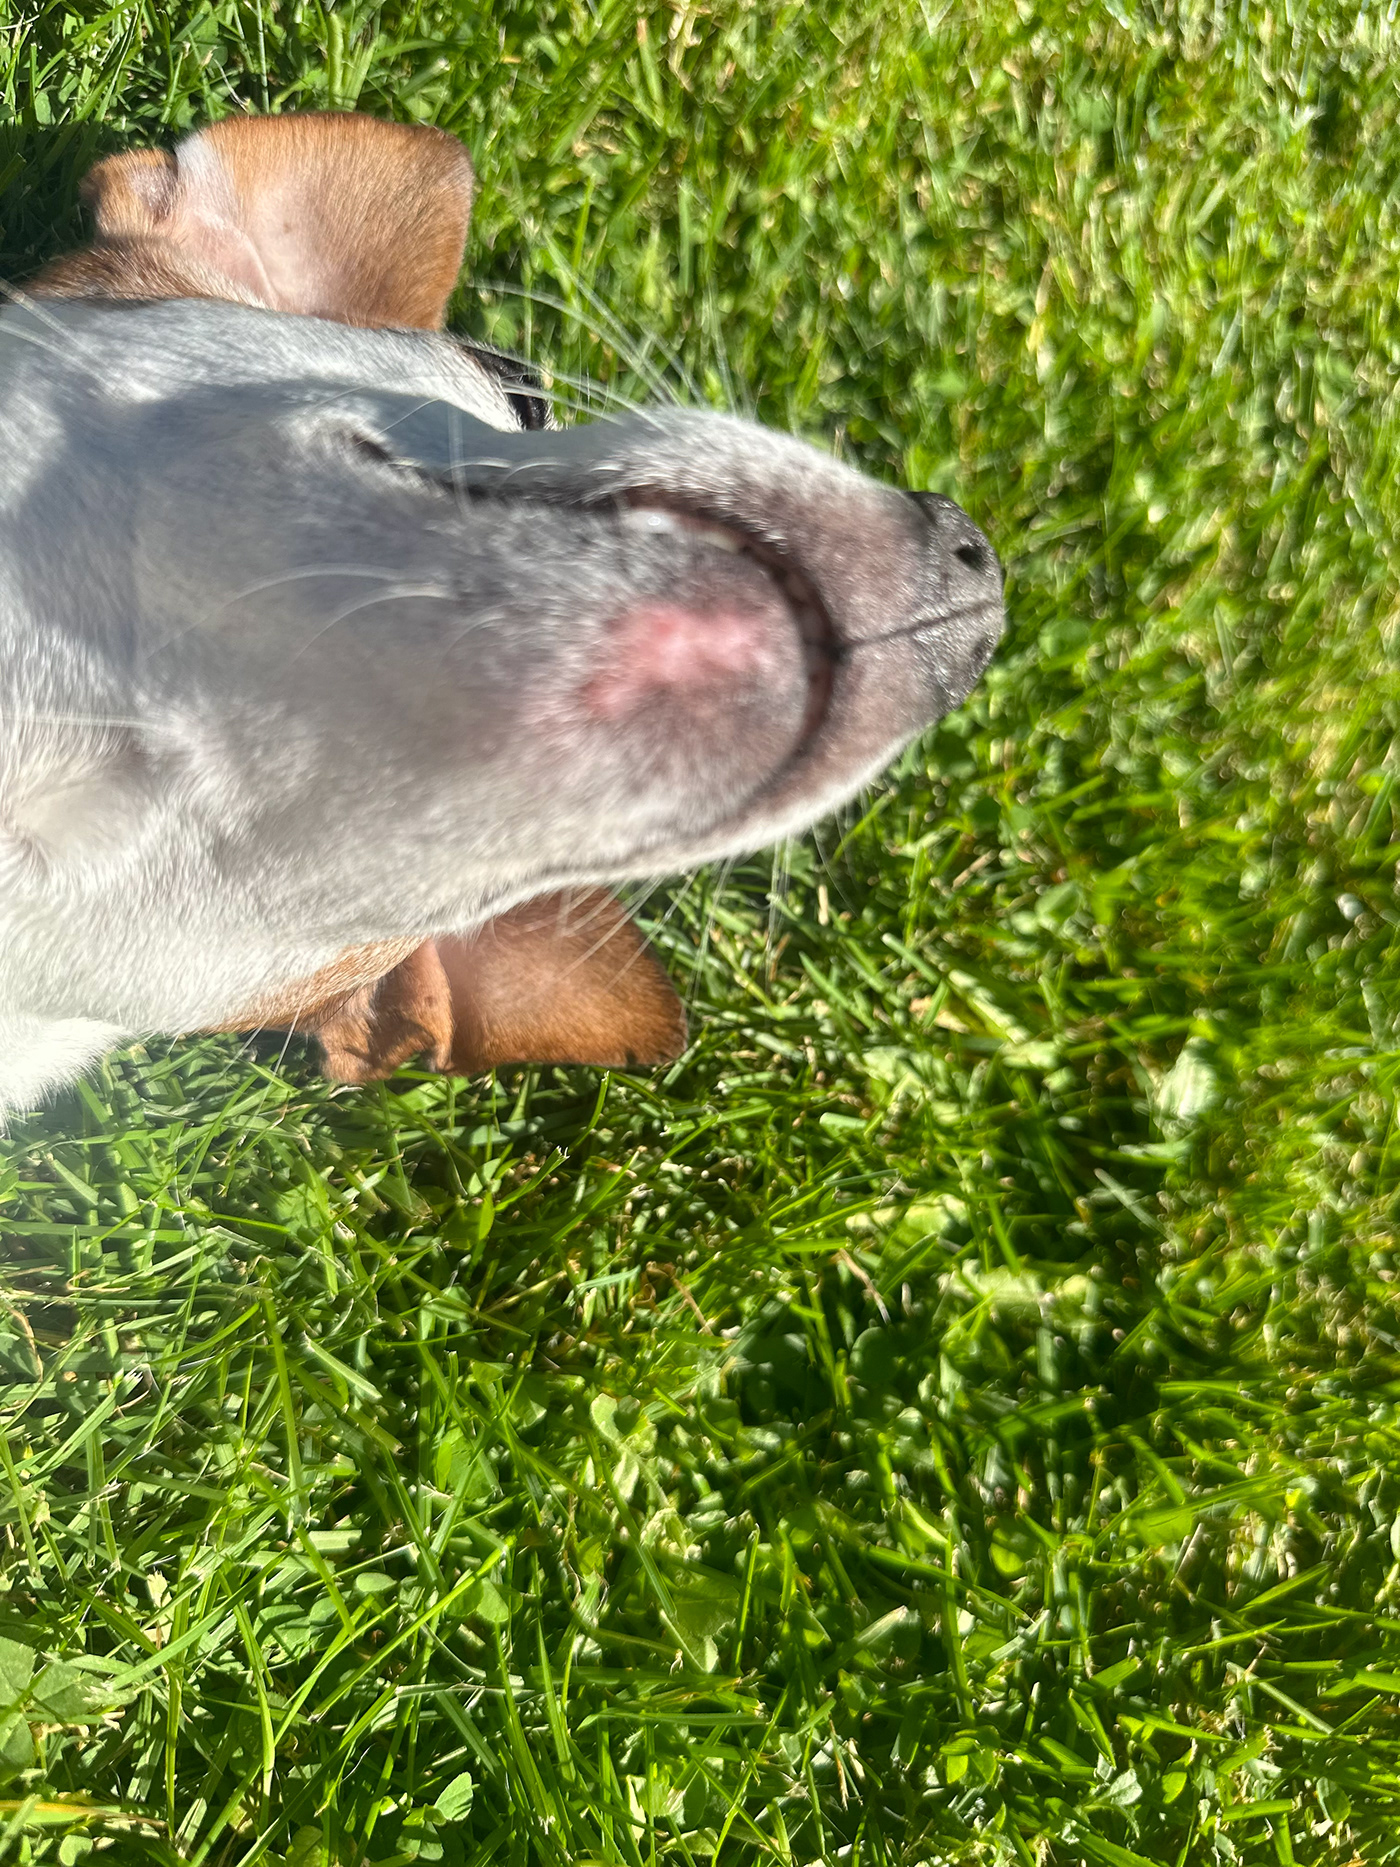 animals dogs pets Pet Portrait outside sunshine cute Fun